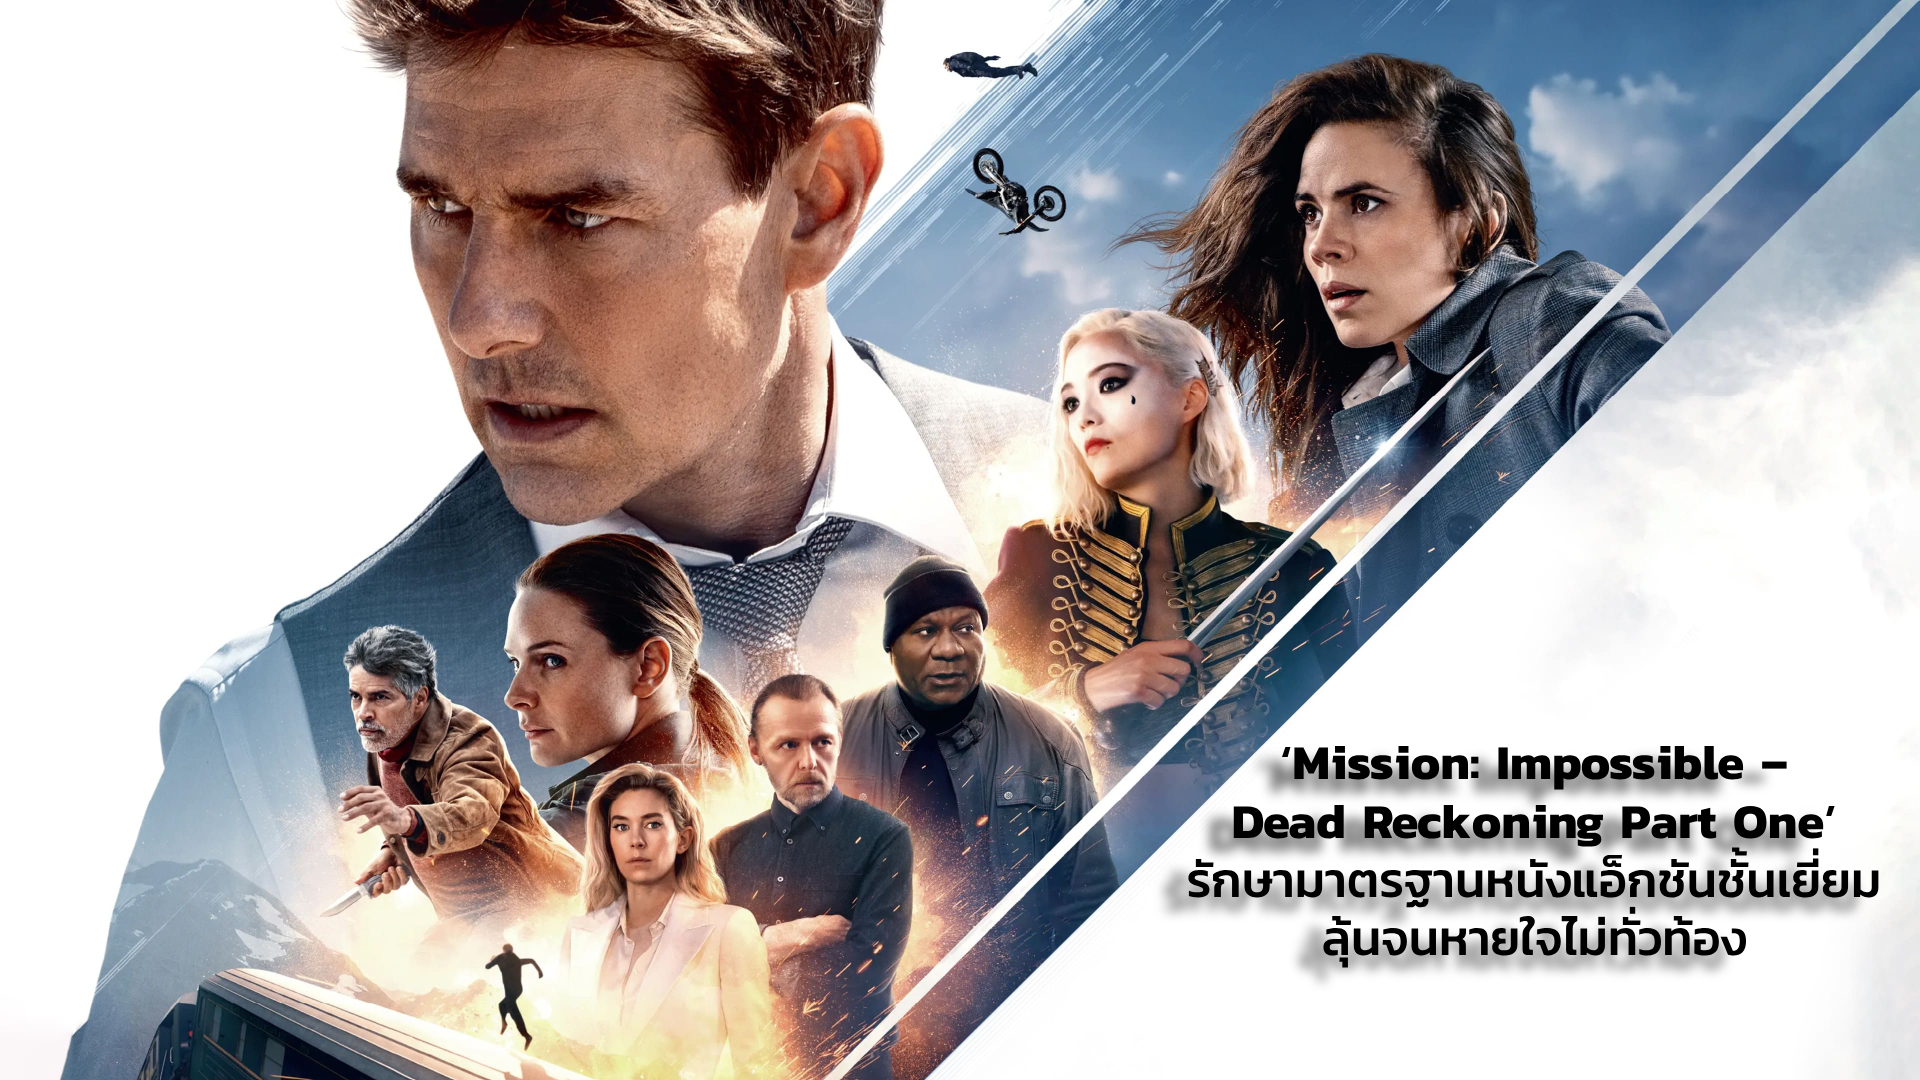 [REVIEW] ‘Mission: Impossible – Dead Reckoning Part One’ รักษามาตรฐานหนังแอ็กชันชั้นเยี่ยม ลุ้นจนหายใจไม่ทั่วท้อง | GOSSIP GUN